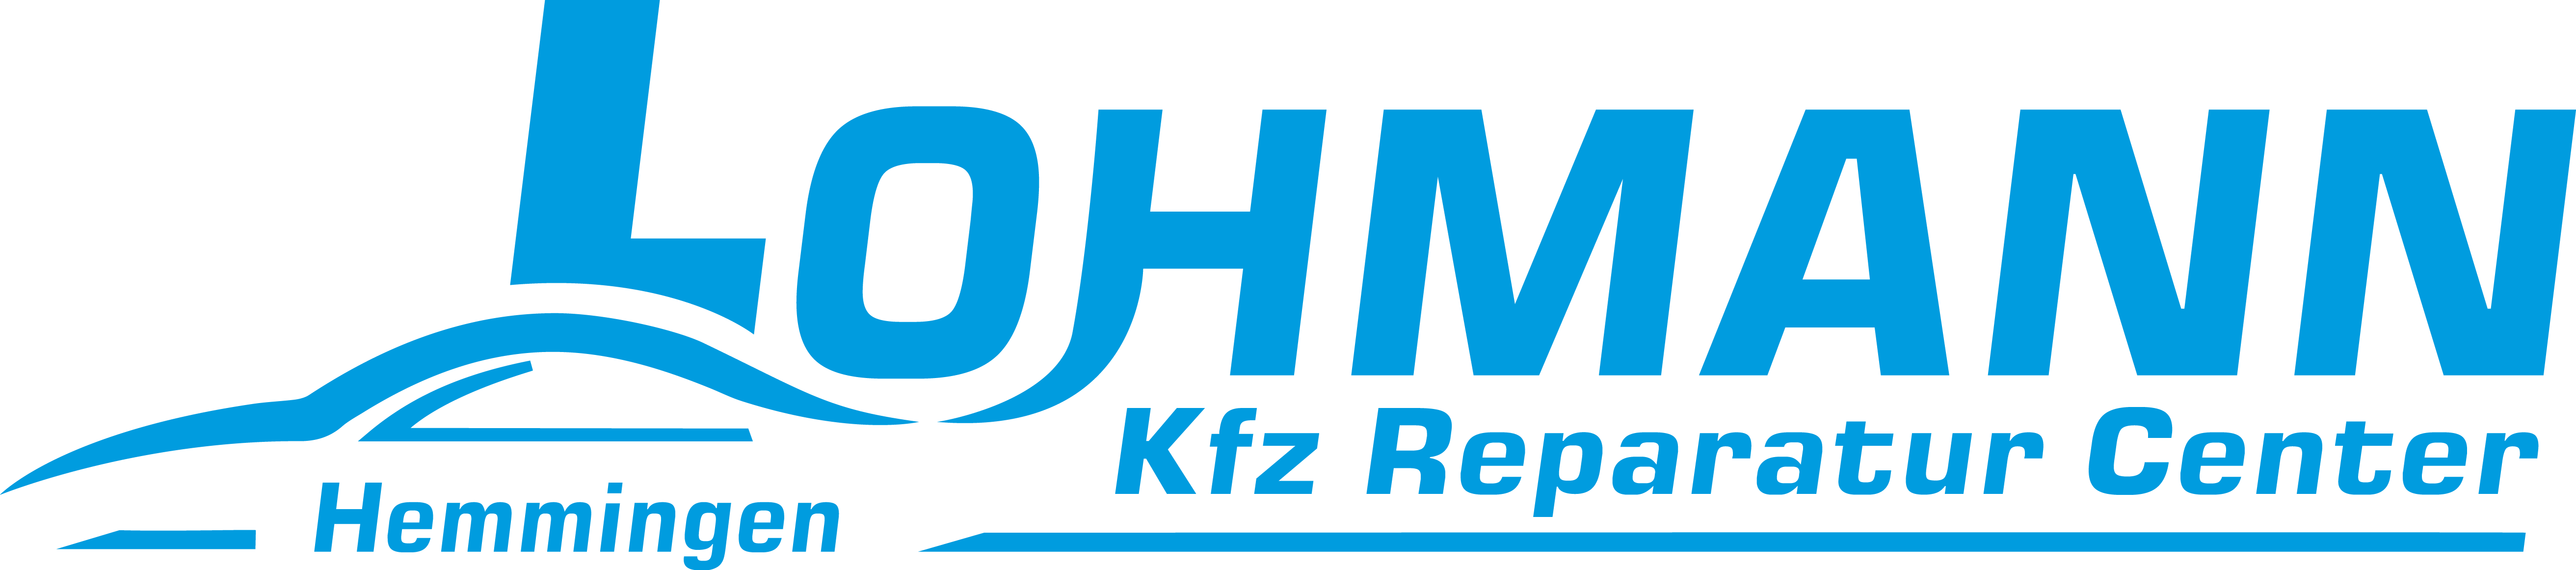 Lohmann-KFZ seit 1986 in Hemmingen